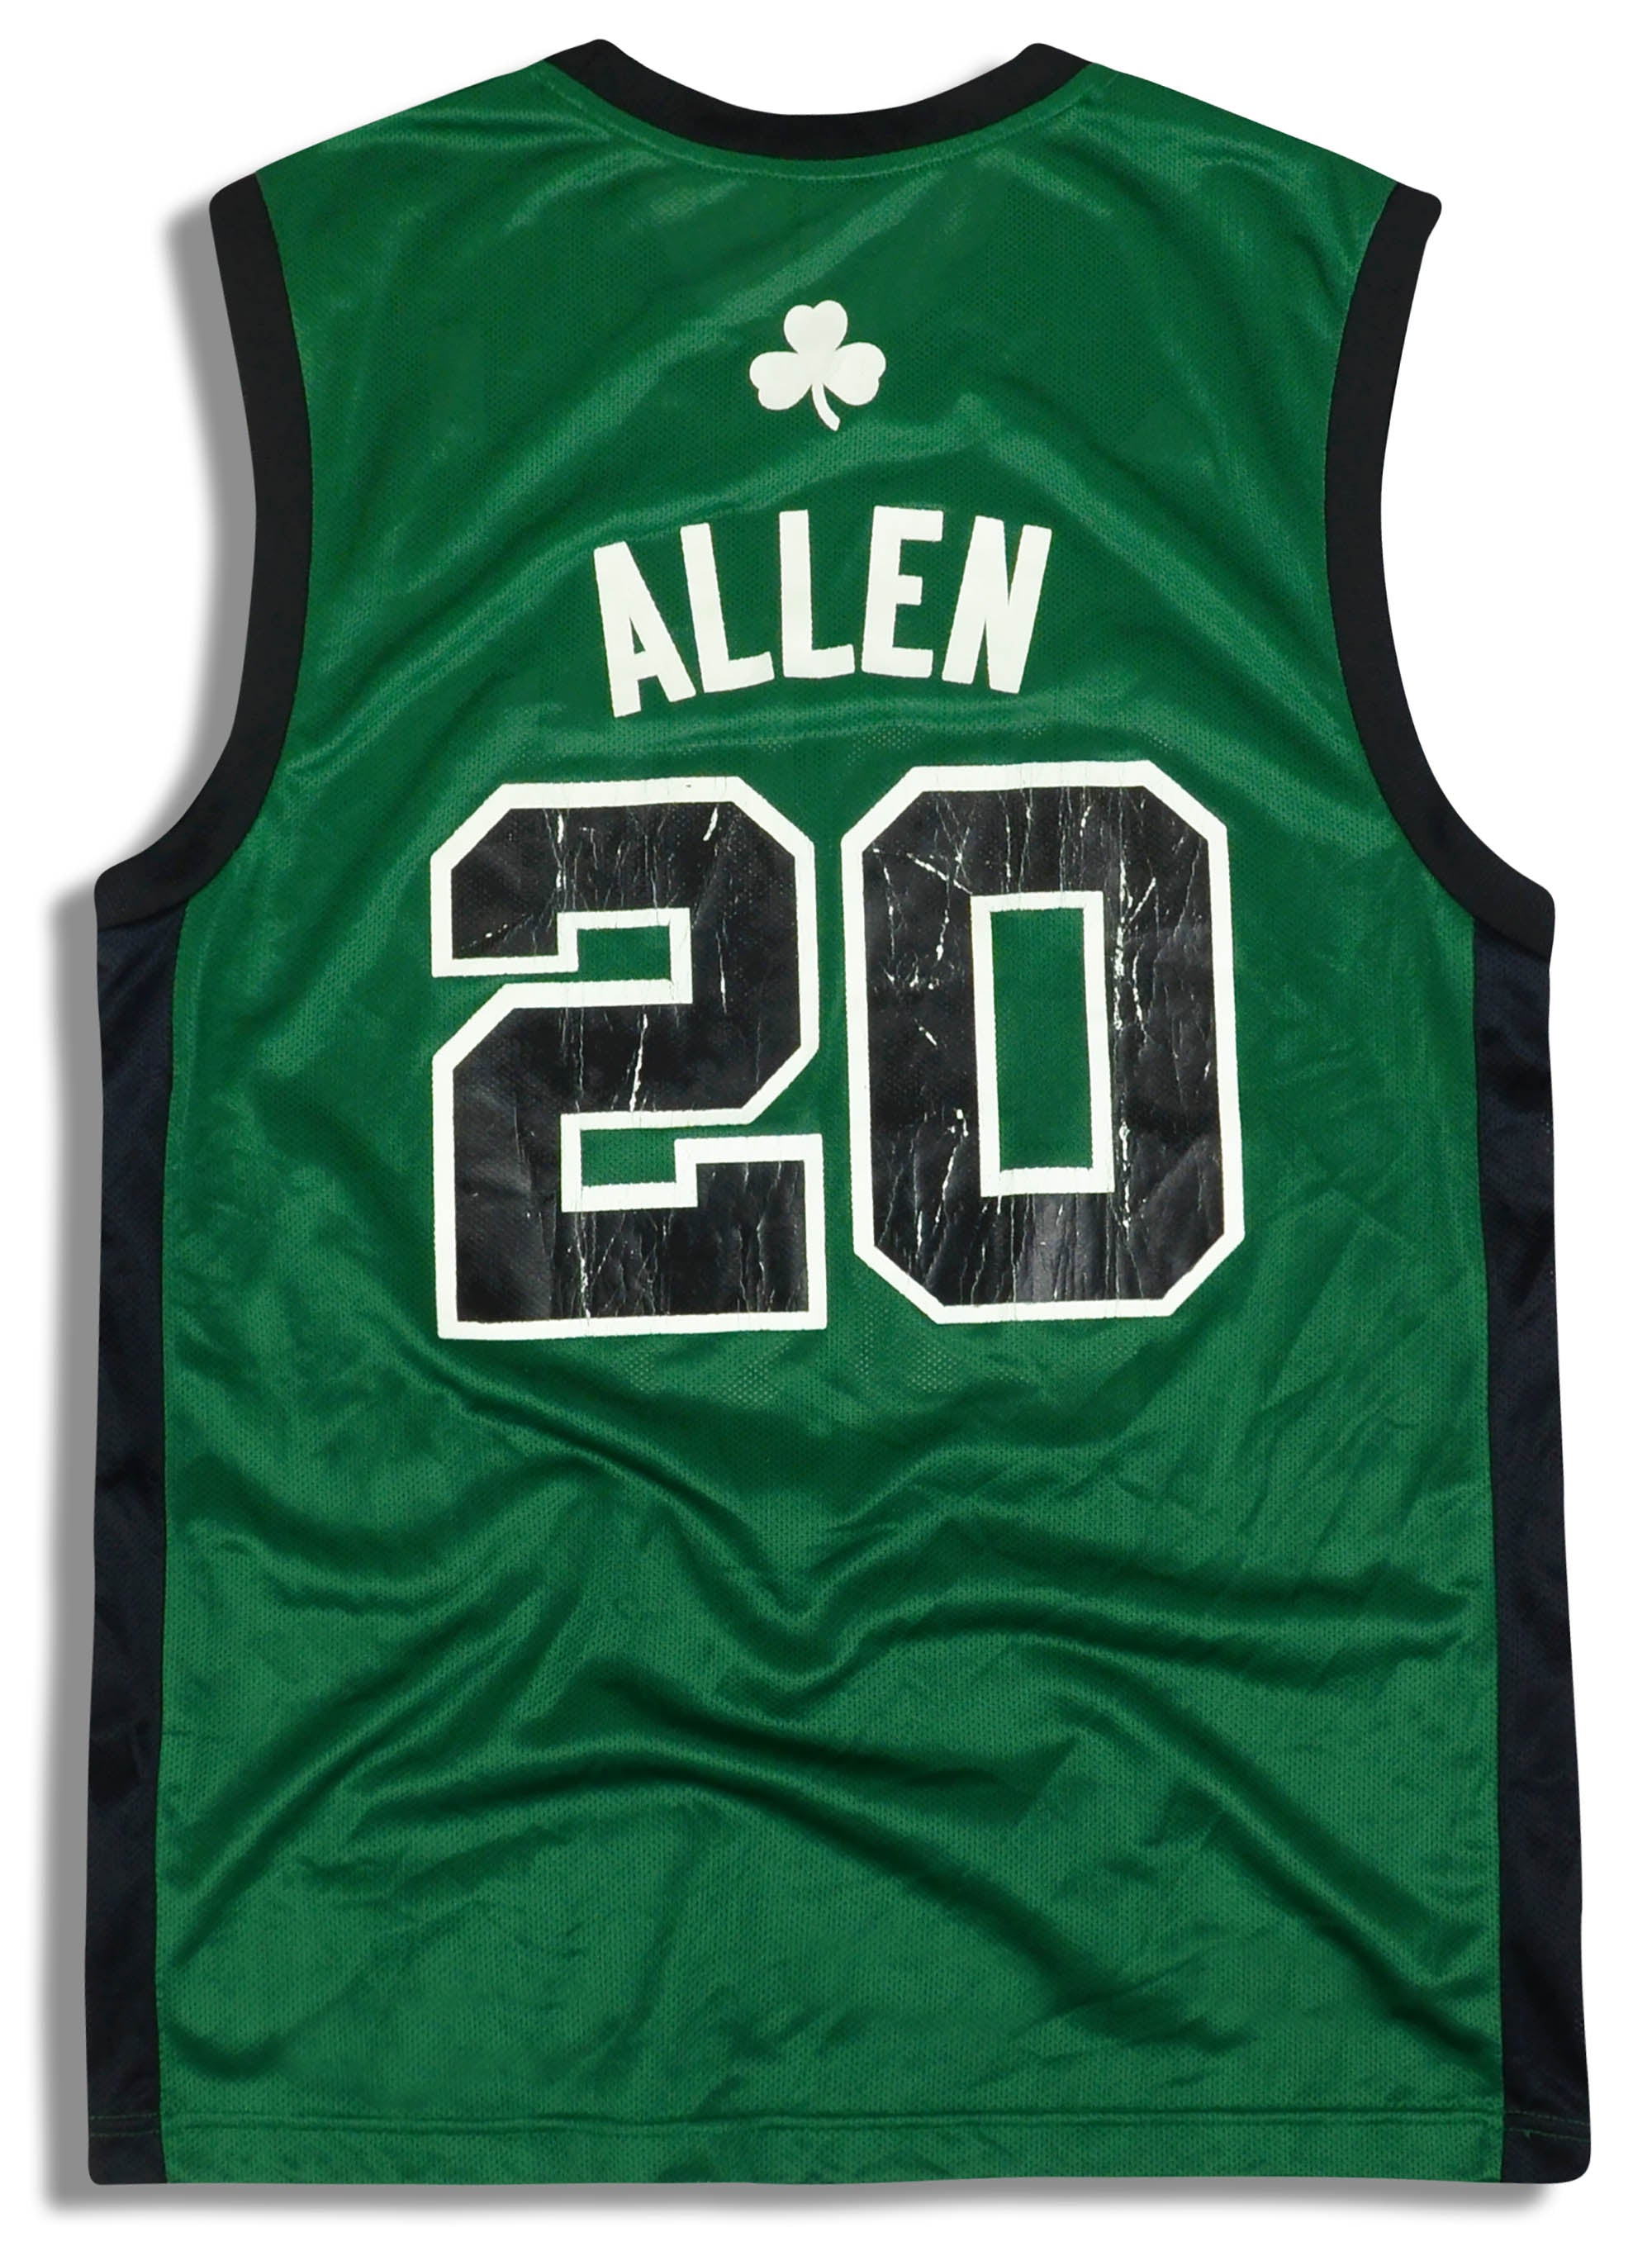 Rajon Rando, VTG Alternate, NBA Boston Celtics Jersey #9, Adidas